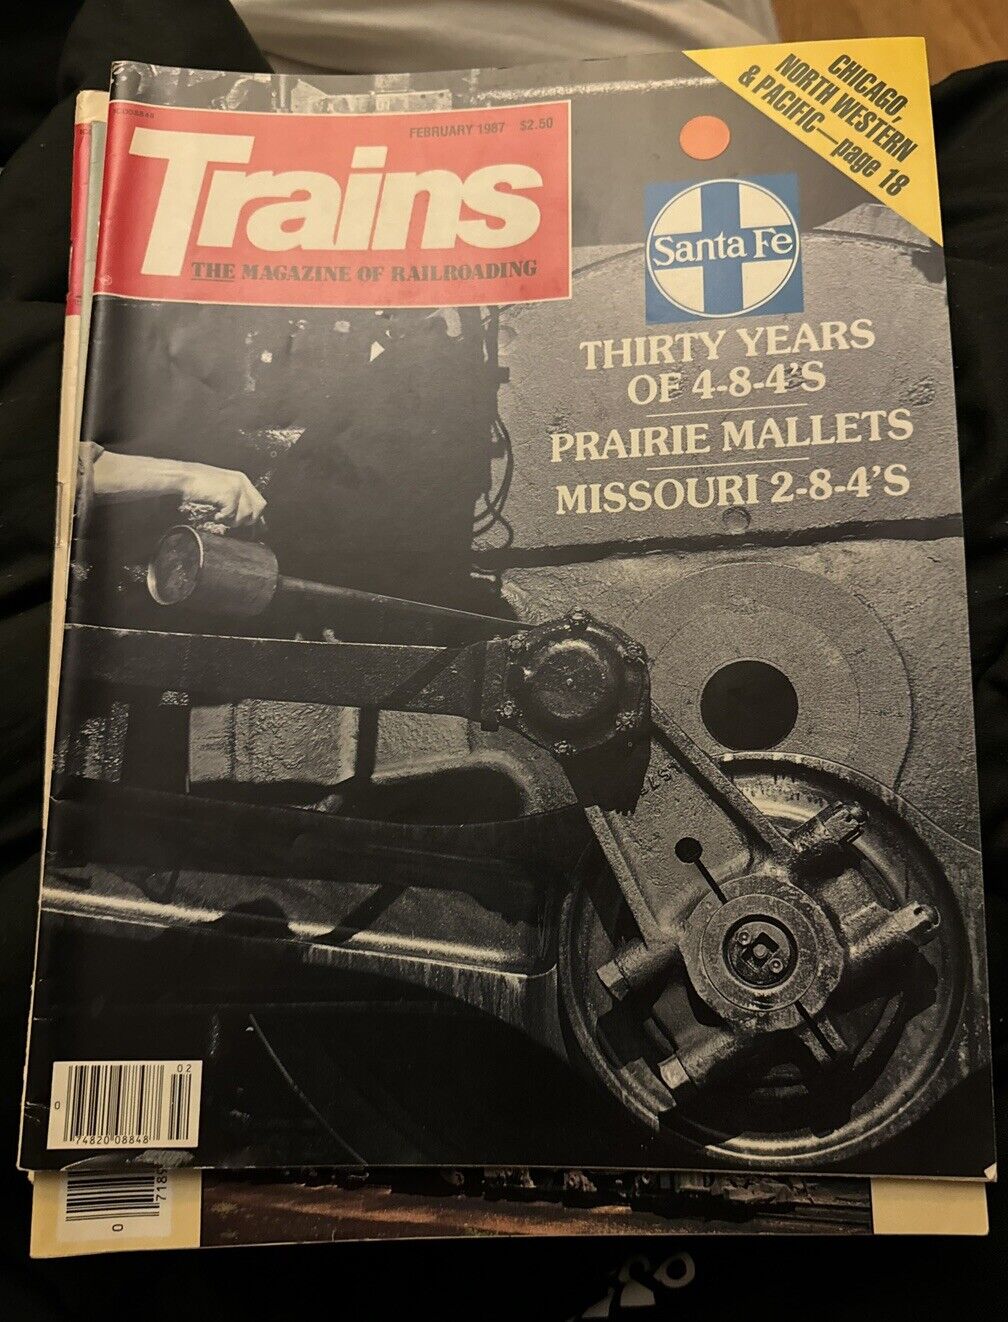 TRAINS, THE MAGAZINE OF RAILROADING FEBRUARY 1987